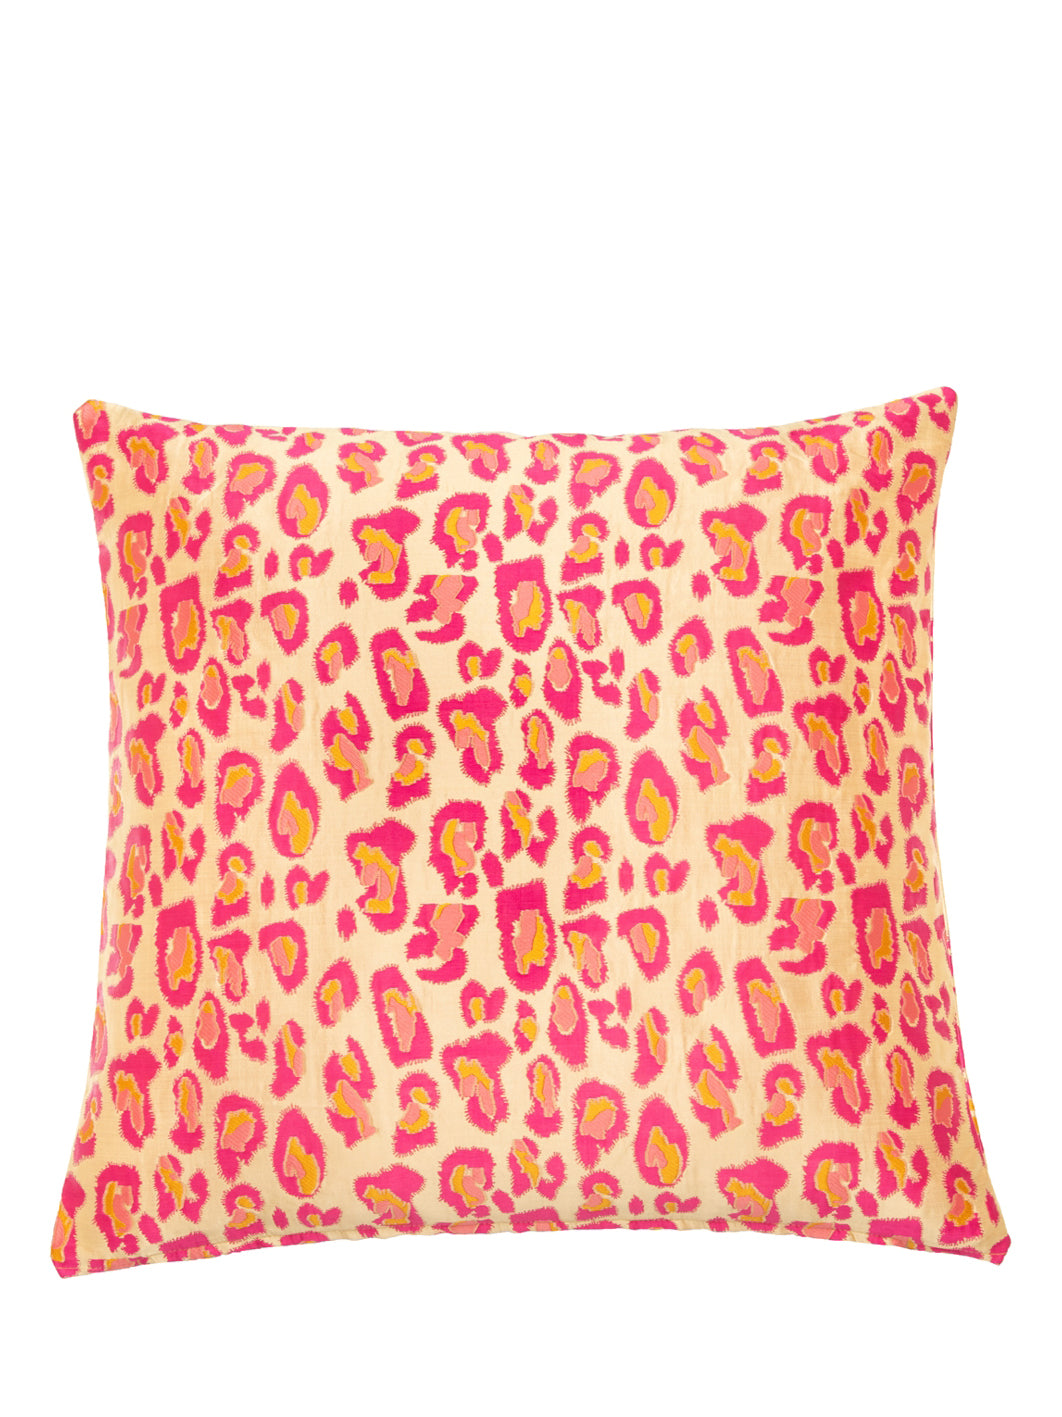 Animal print cushion (50x50 cm), pink